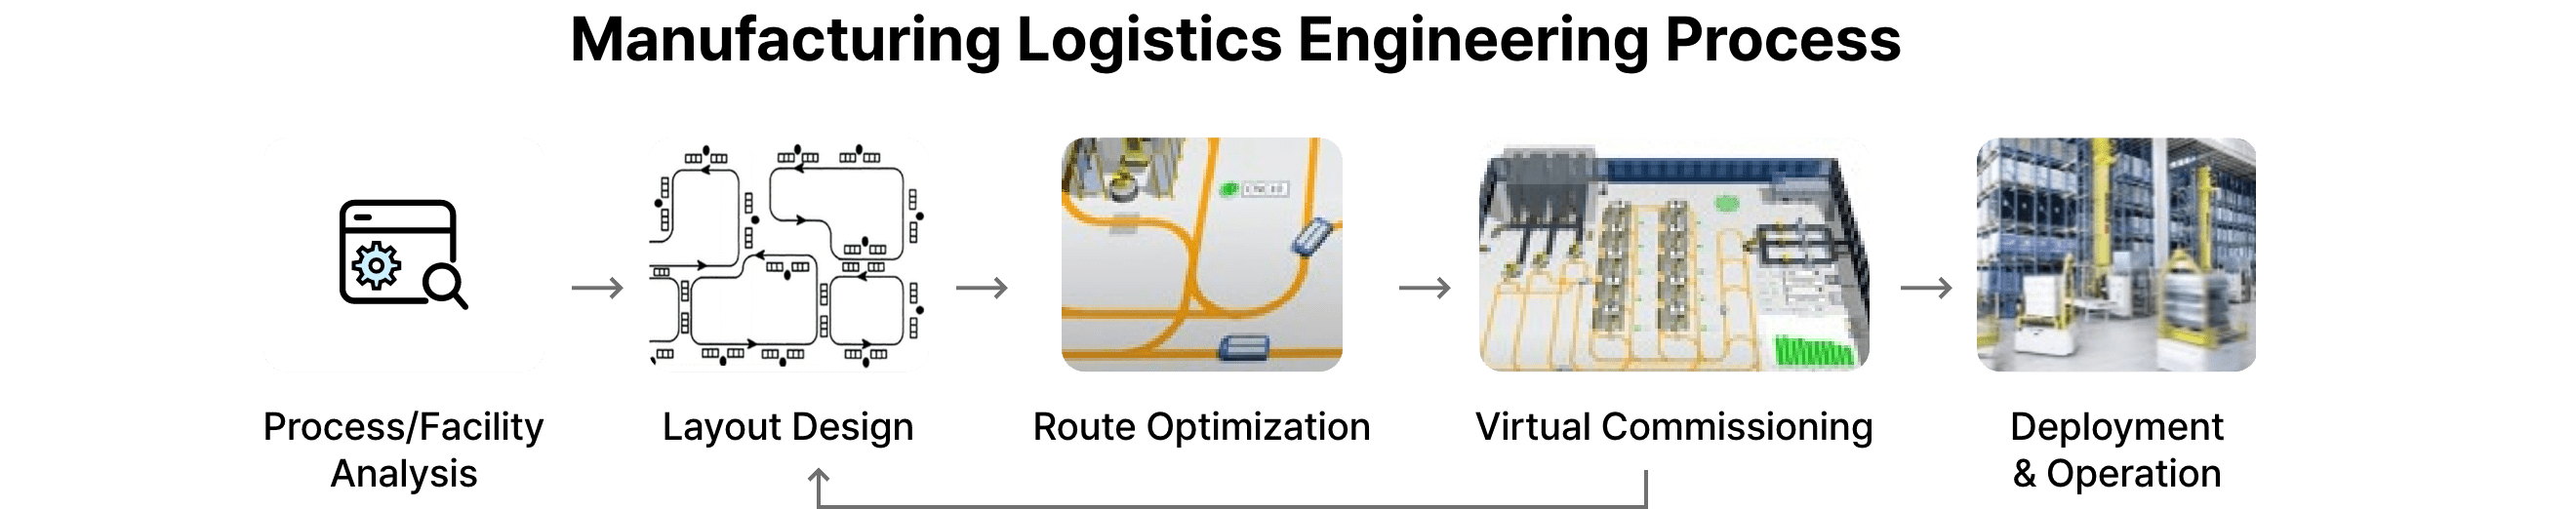 Manufacturing Logistics Engineering Process